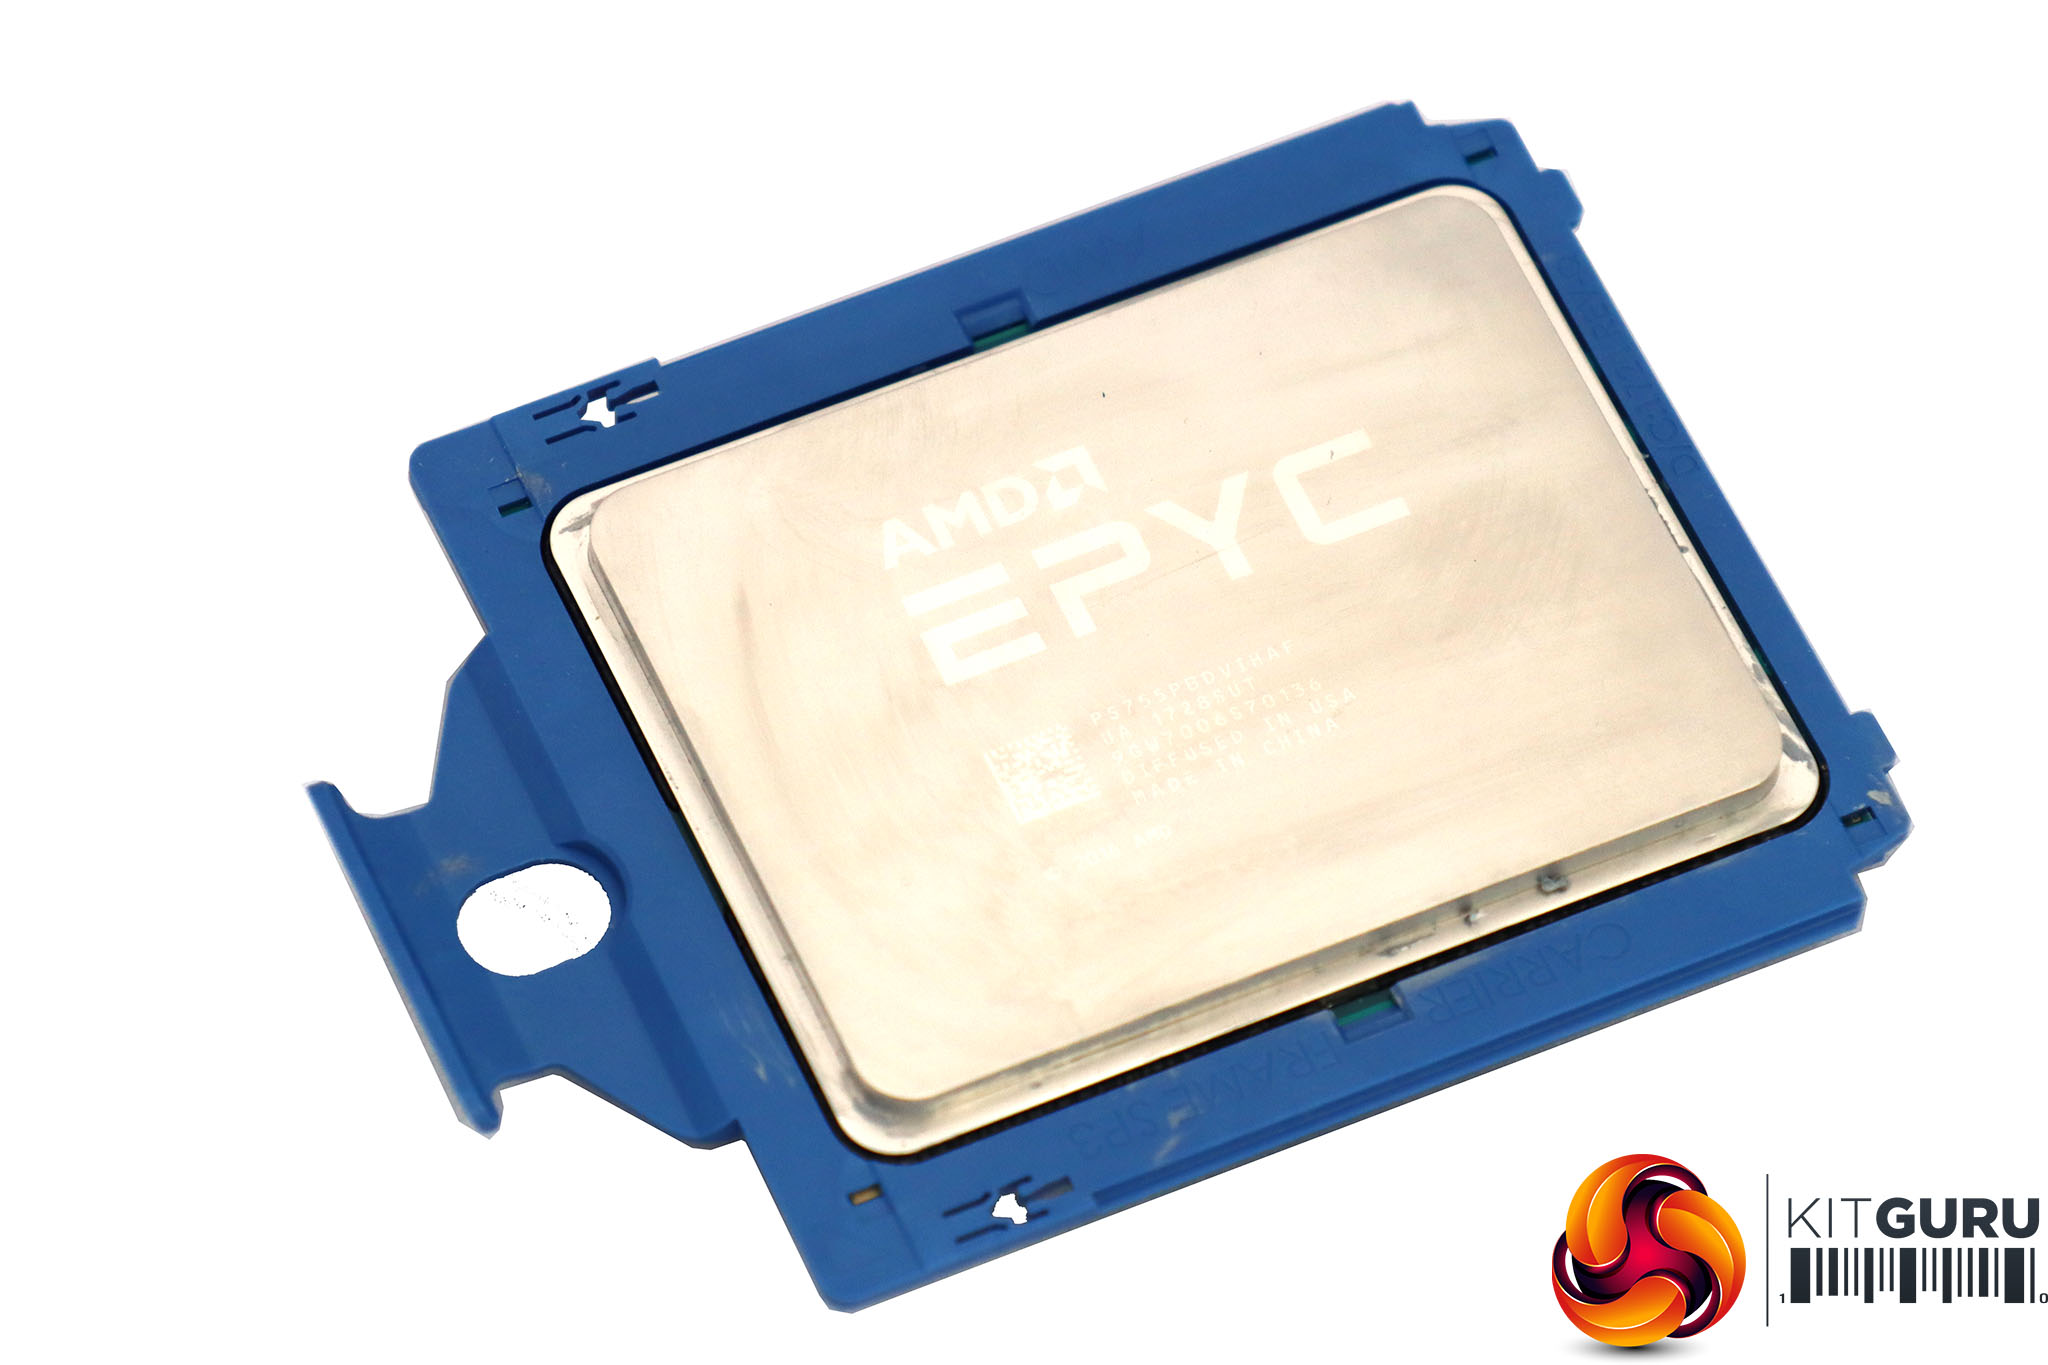 Gigabyte MZ01-CE0 AMD EPYC Workstation Motherboard Review 